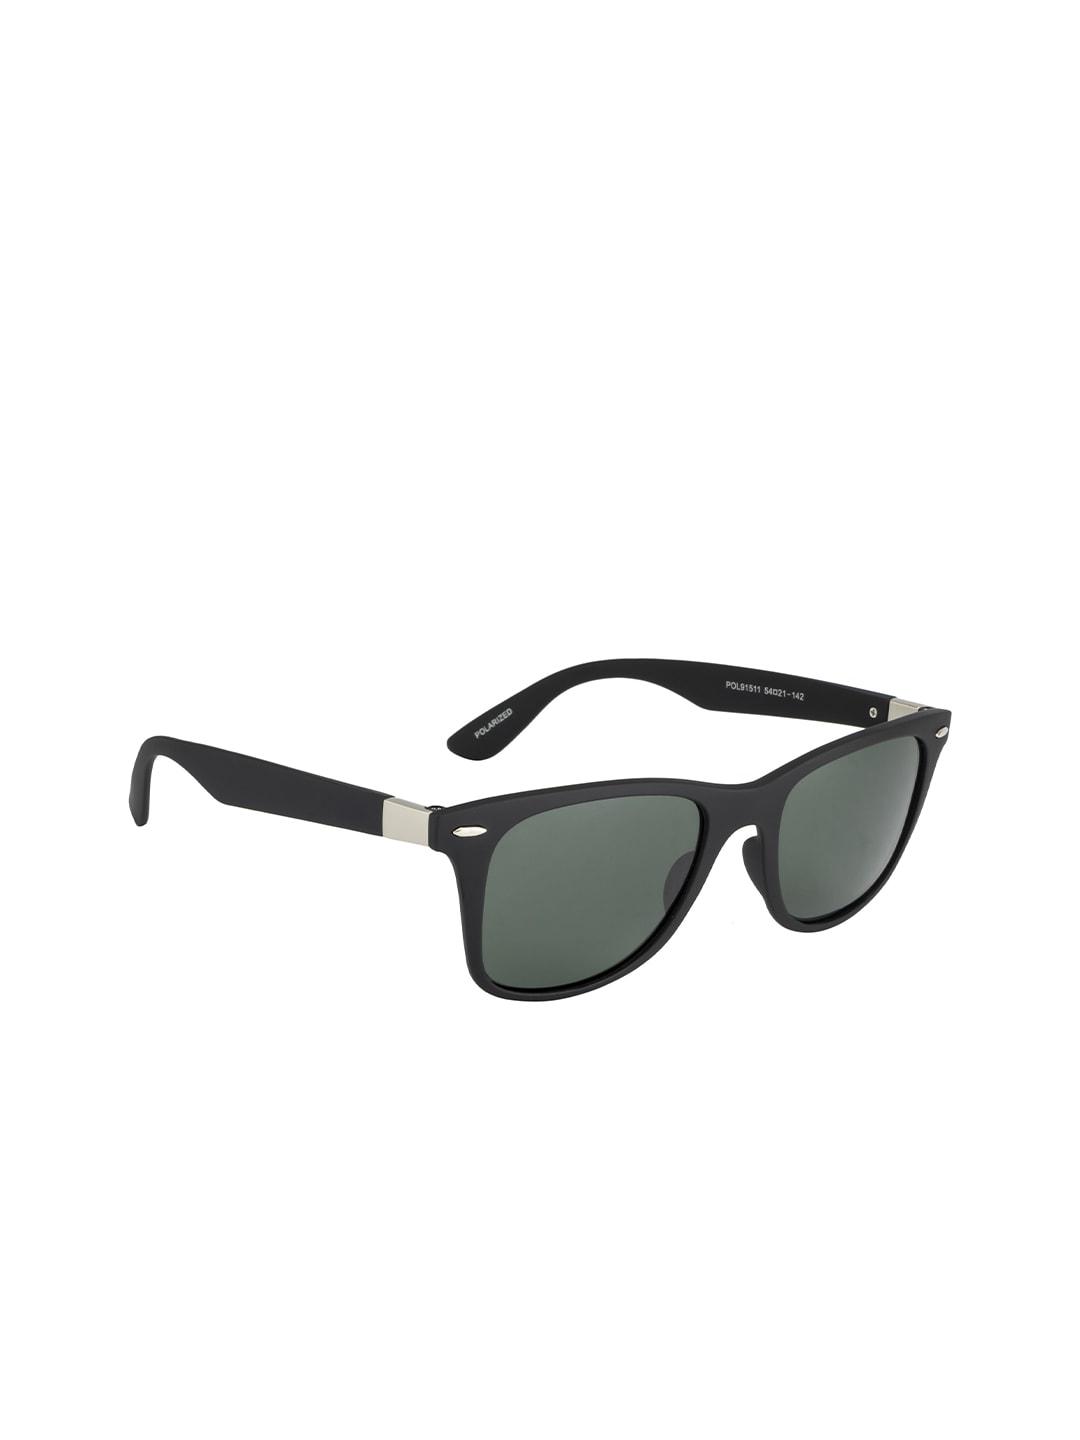 mast & harbour unisex green lens & black wayfarer sunglasses with polarised and uv protected lens